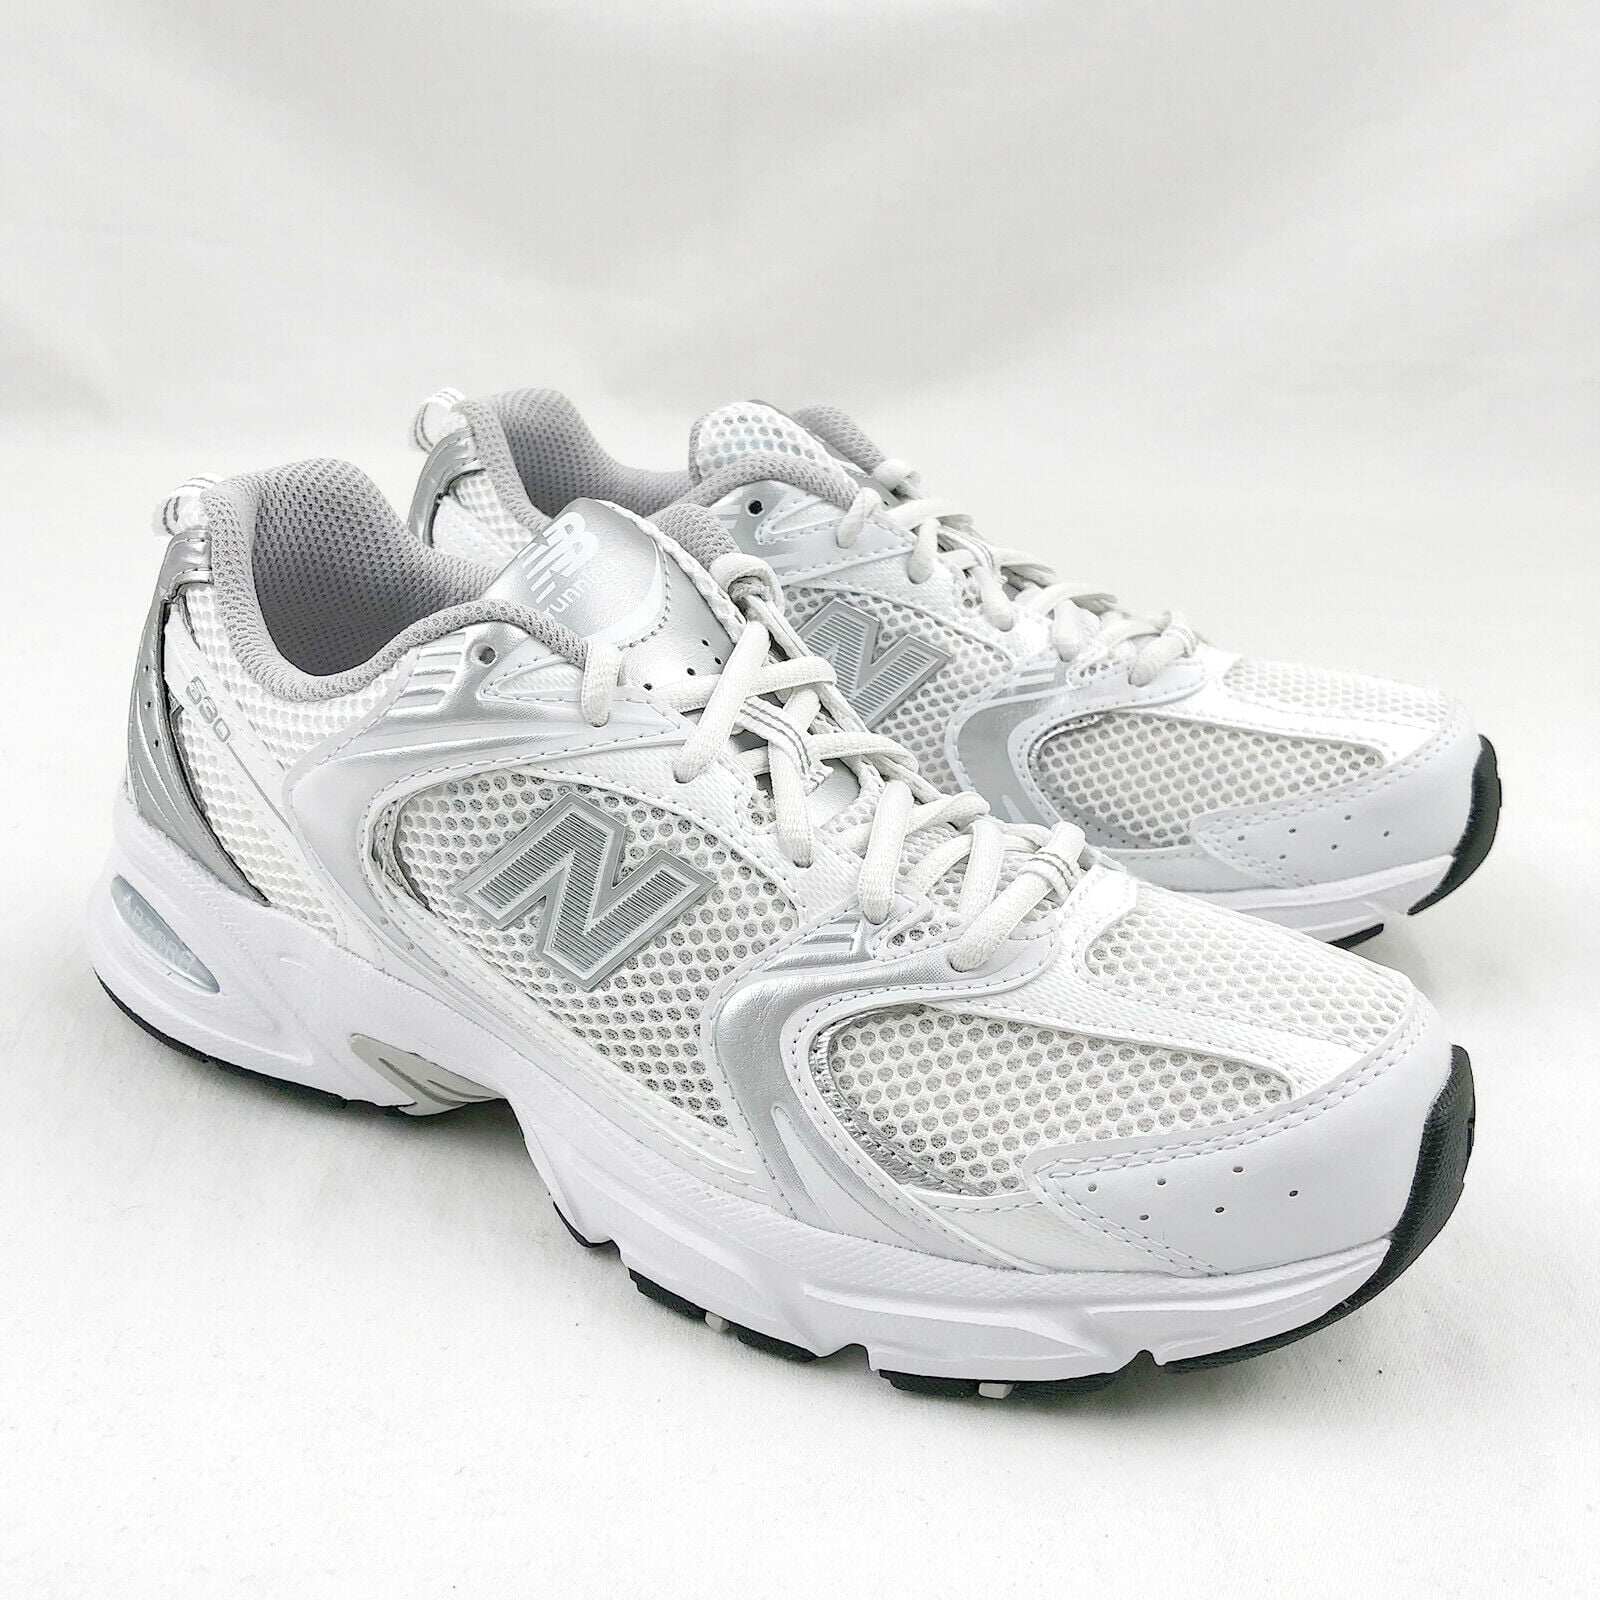 اختبار كيمياء New Balance 530 Retro White Silver Running Shoes Men's Sneakers MR530EMA اختبار كيمياء